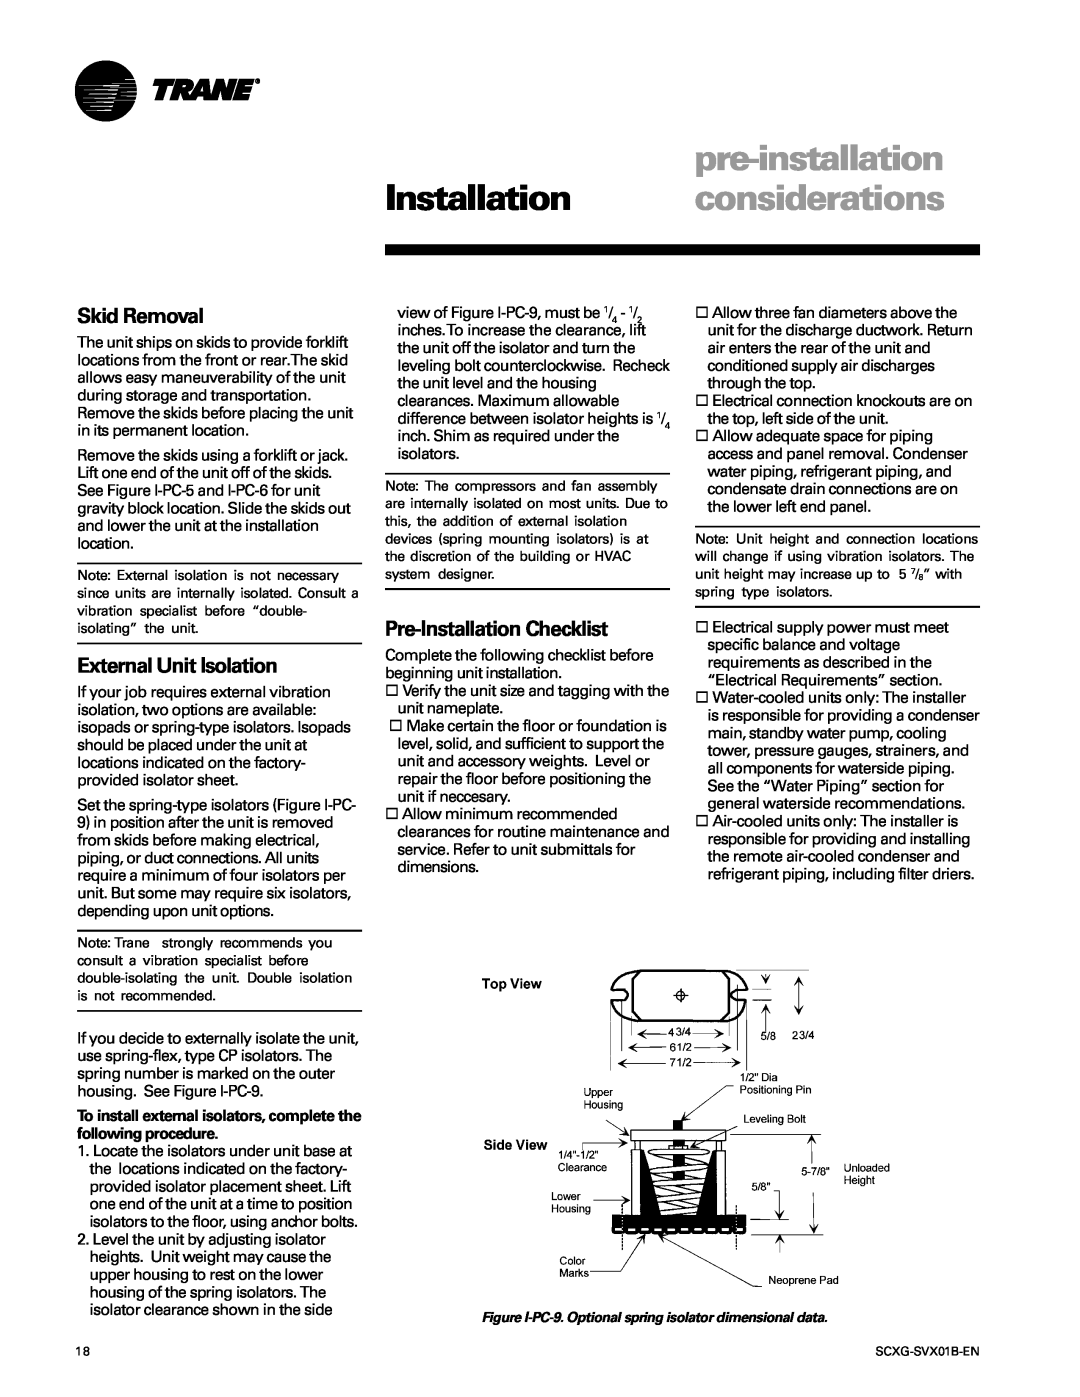 Trane SCXG-SVX01B-EN manual Skid Removal, External Unit Isolation, Pre-InstallationChecklist 